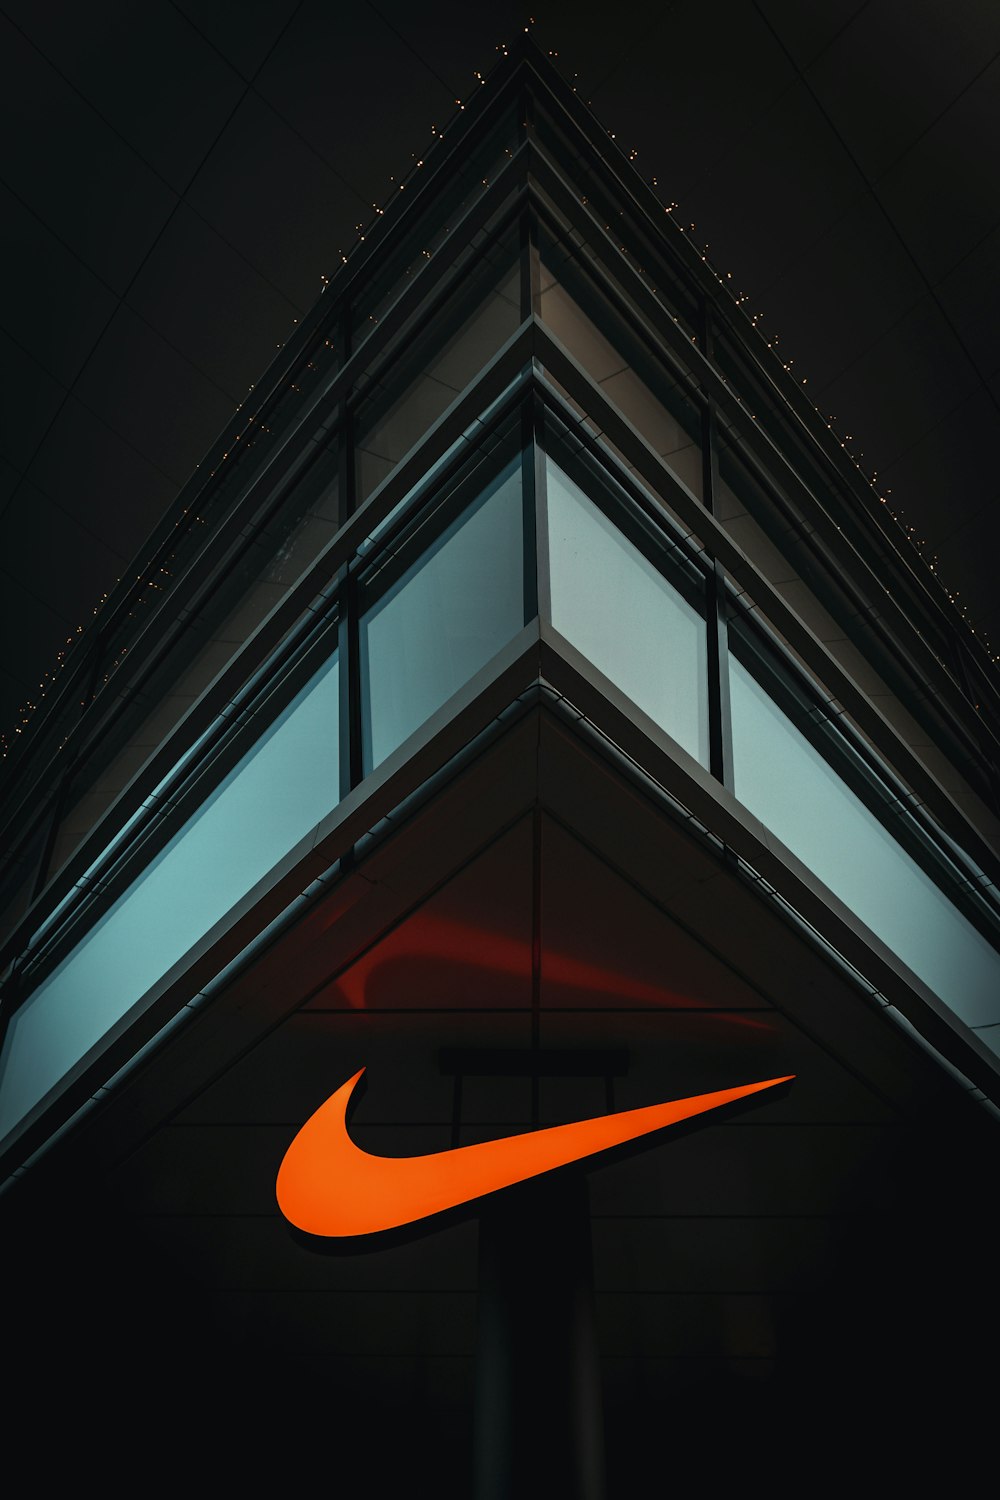 Nike Wallpapers: Descarga HD gratuita [500+ HQ] | Unsplash